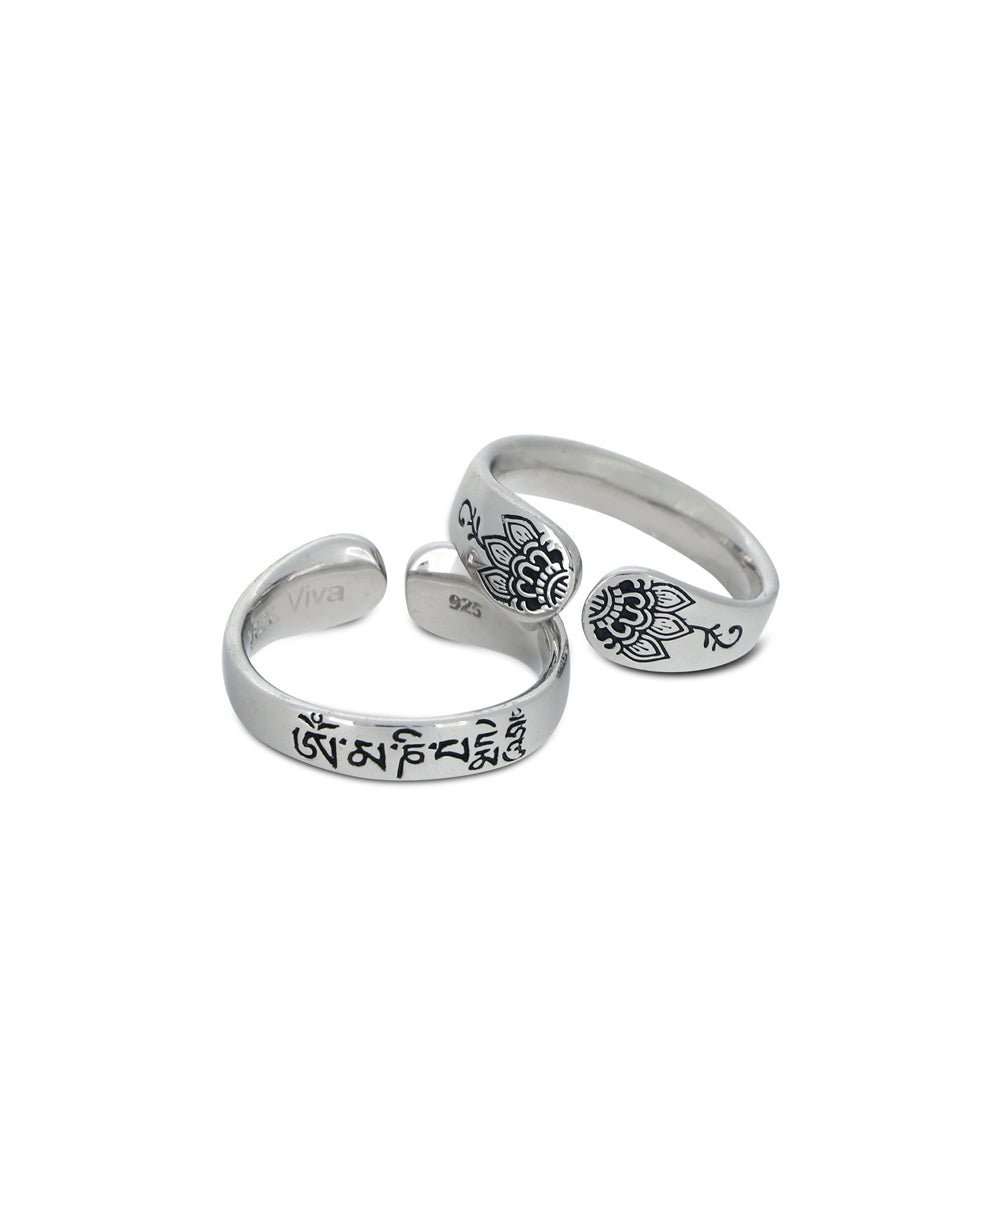 Om Mani Padme Hum Sterling Silver Adjustable Ring - Rings